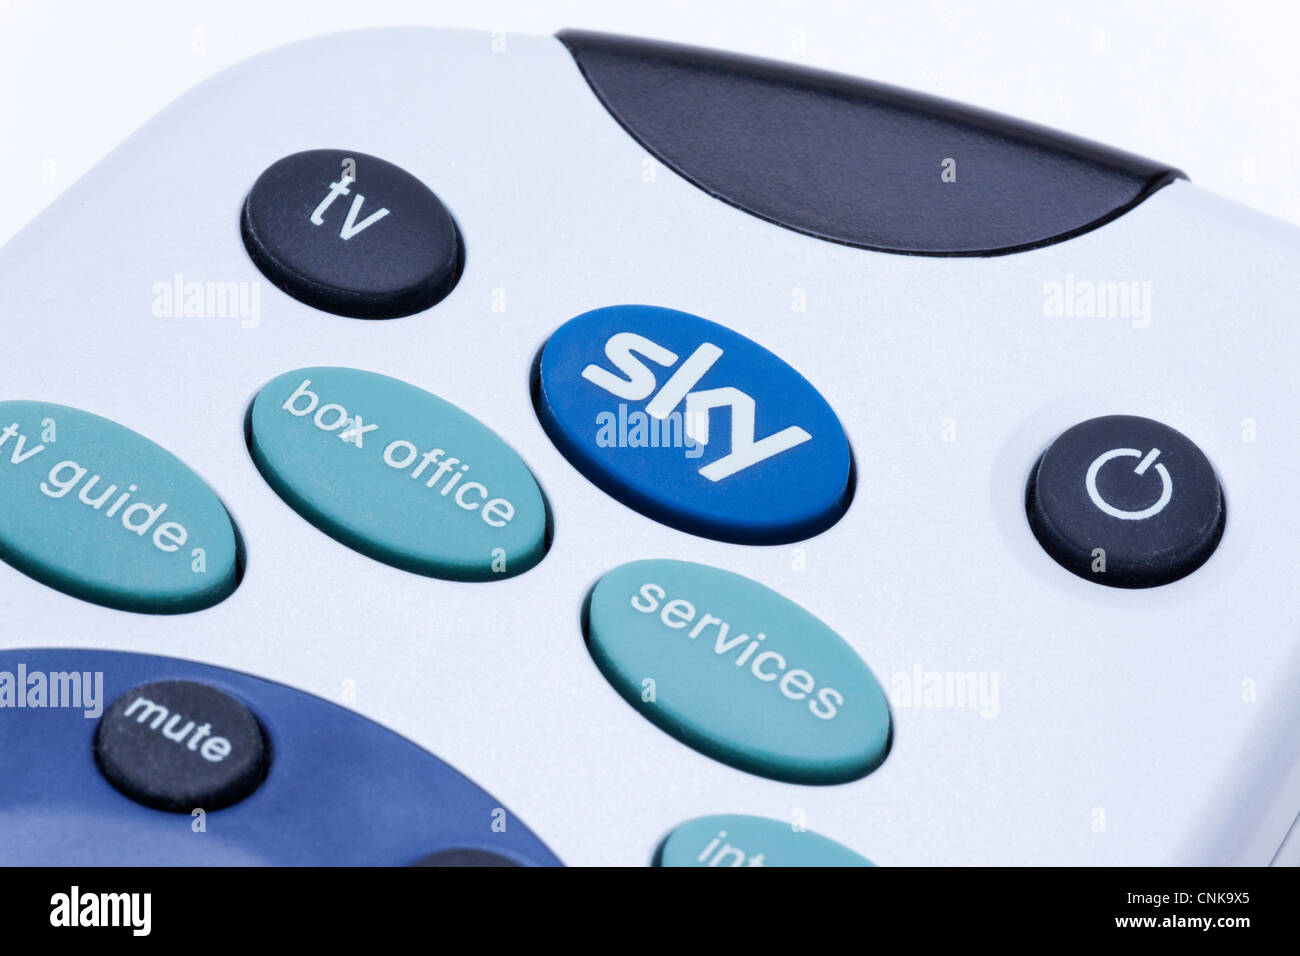 Sky TV remote control handset Stock Photo